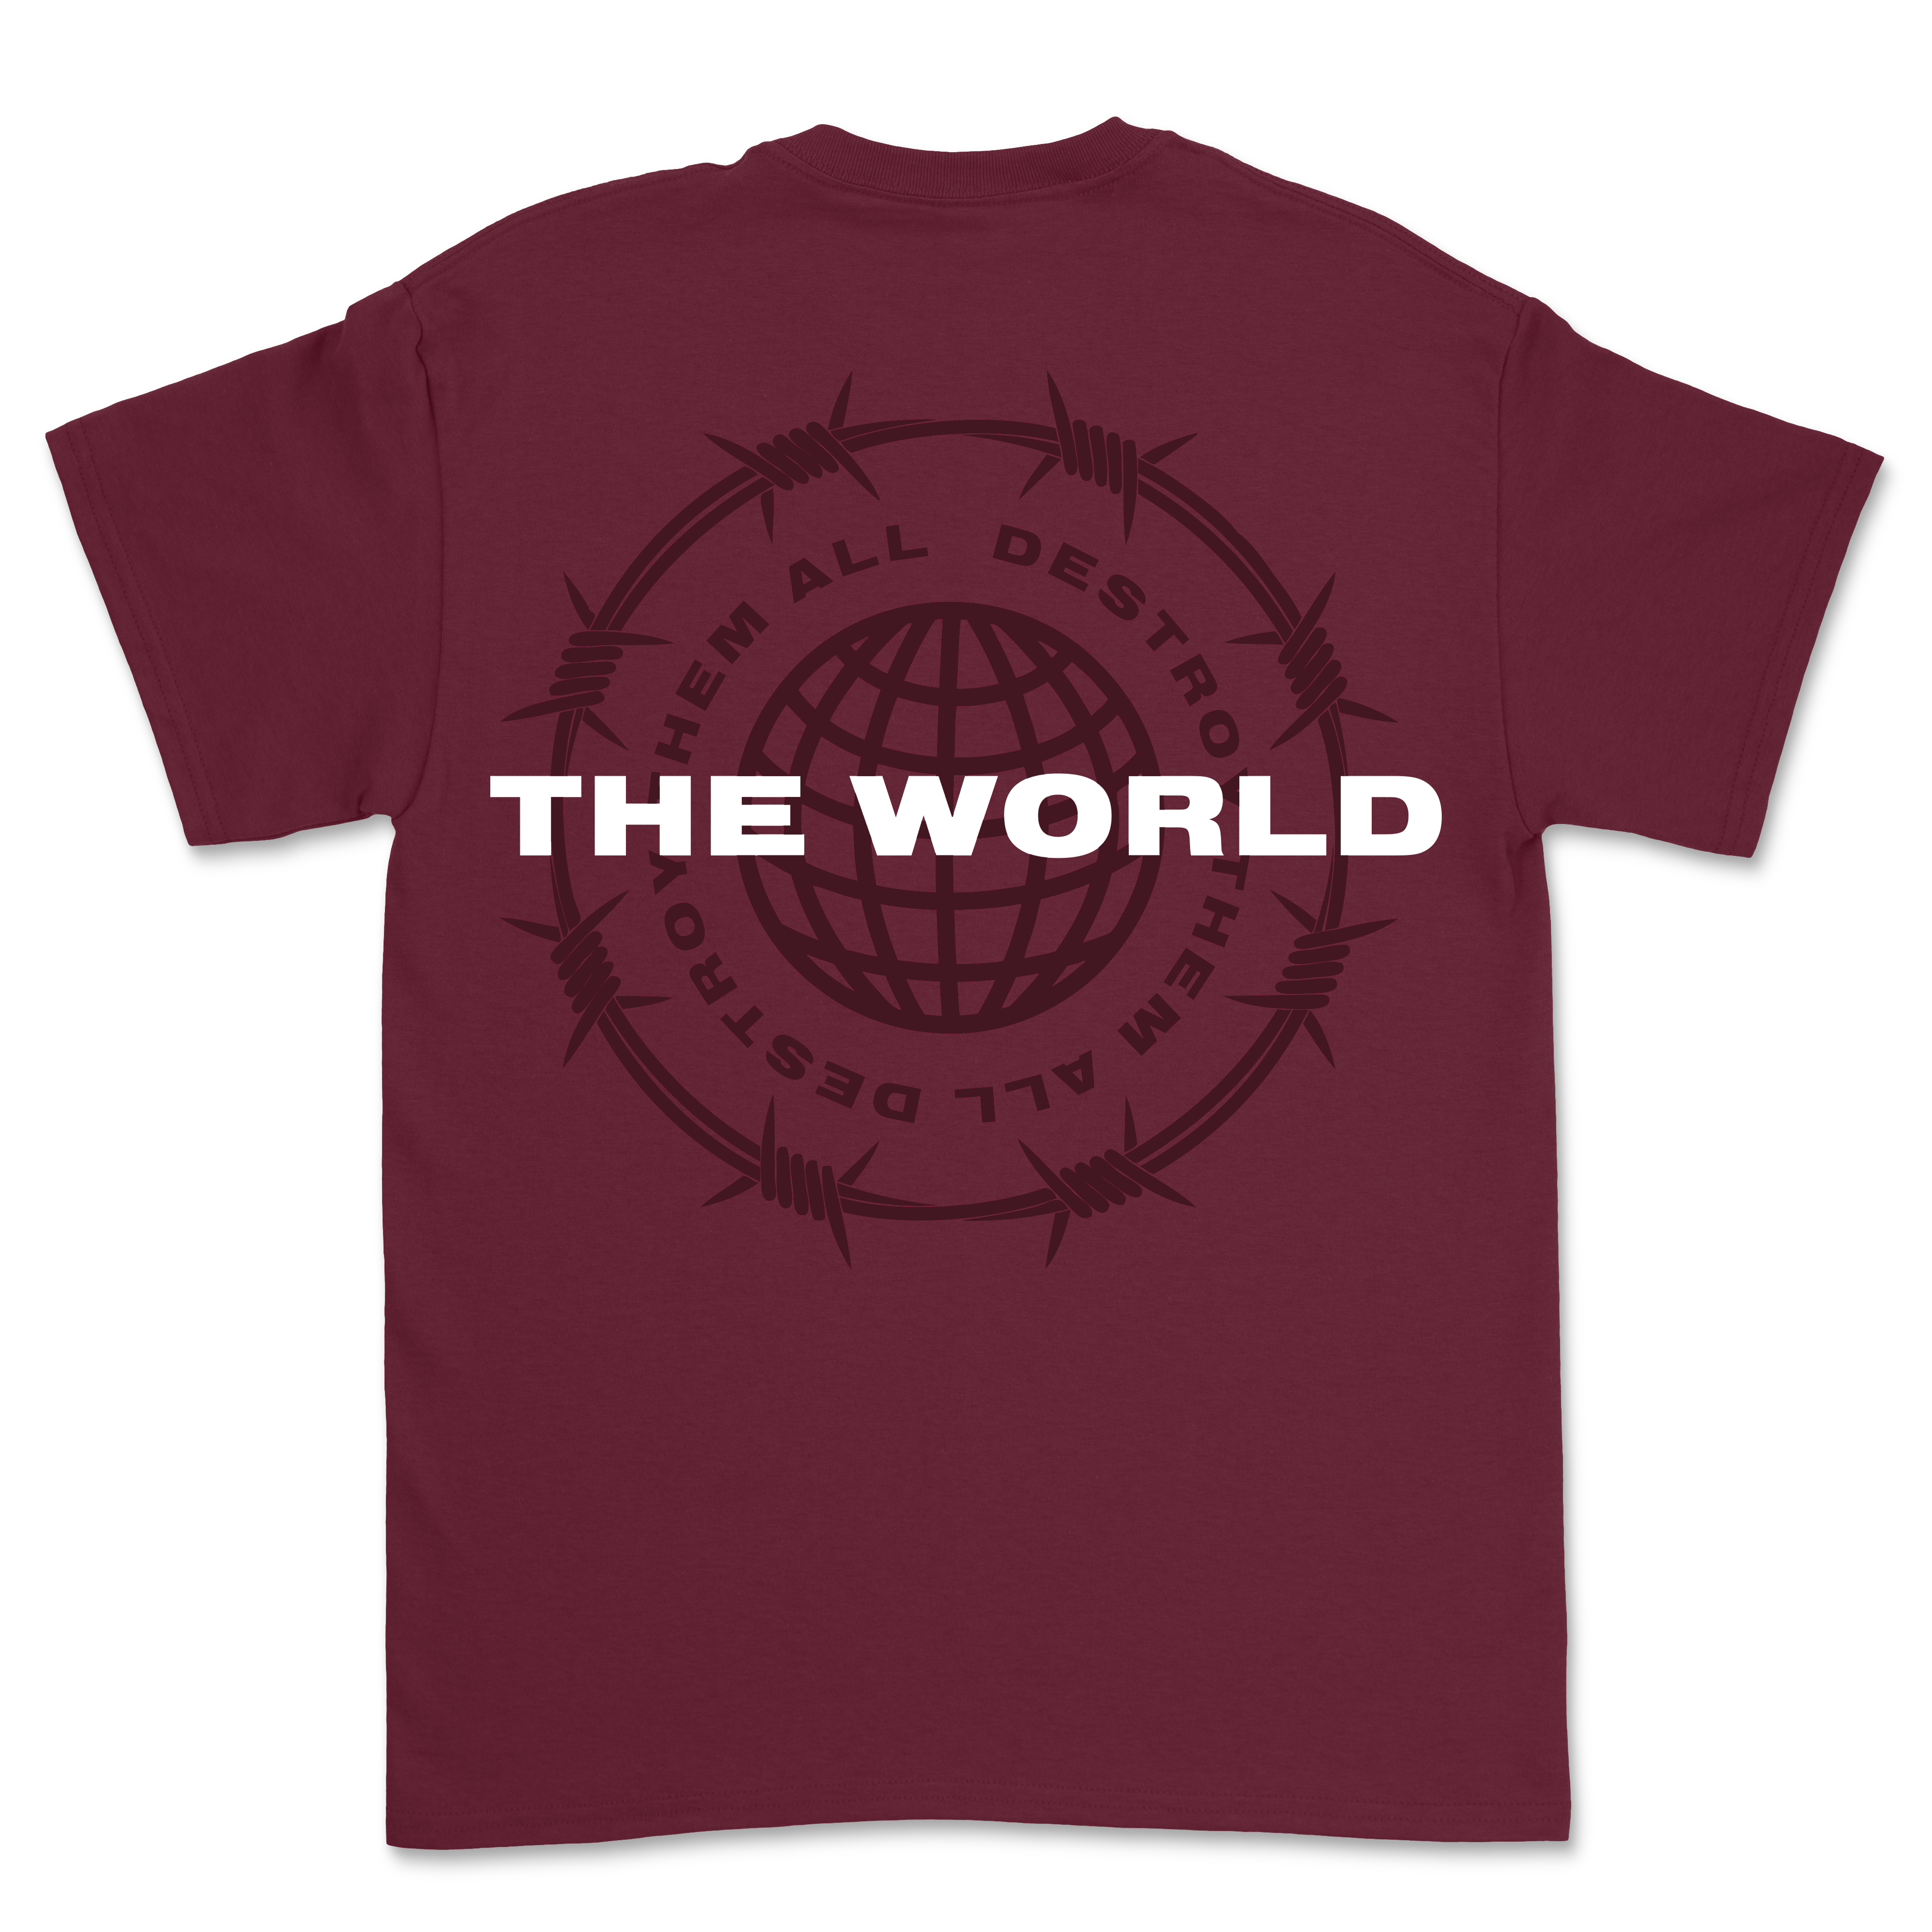 The World - Destroy Them All Shirt (Maroon)